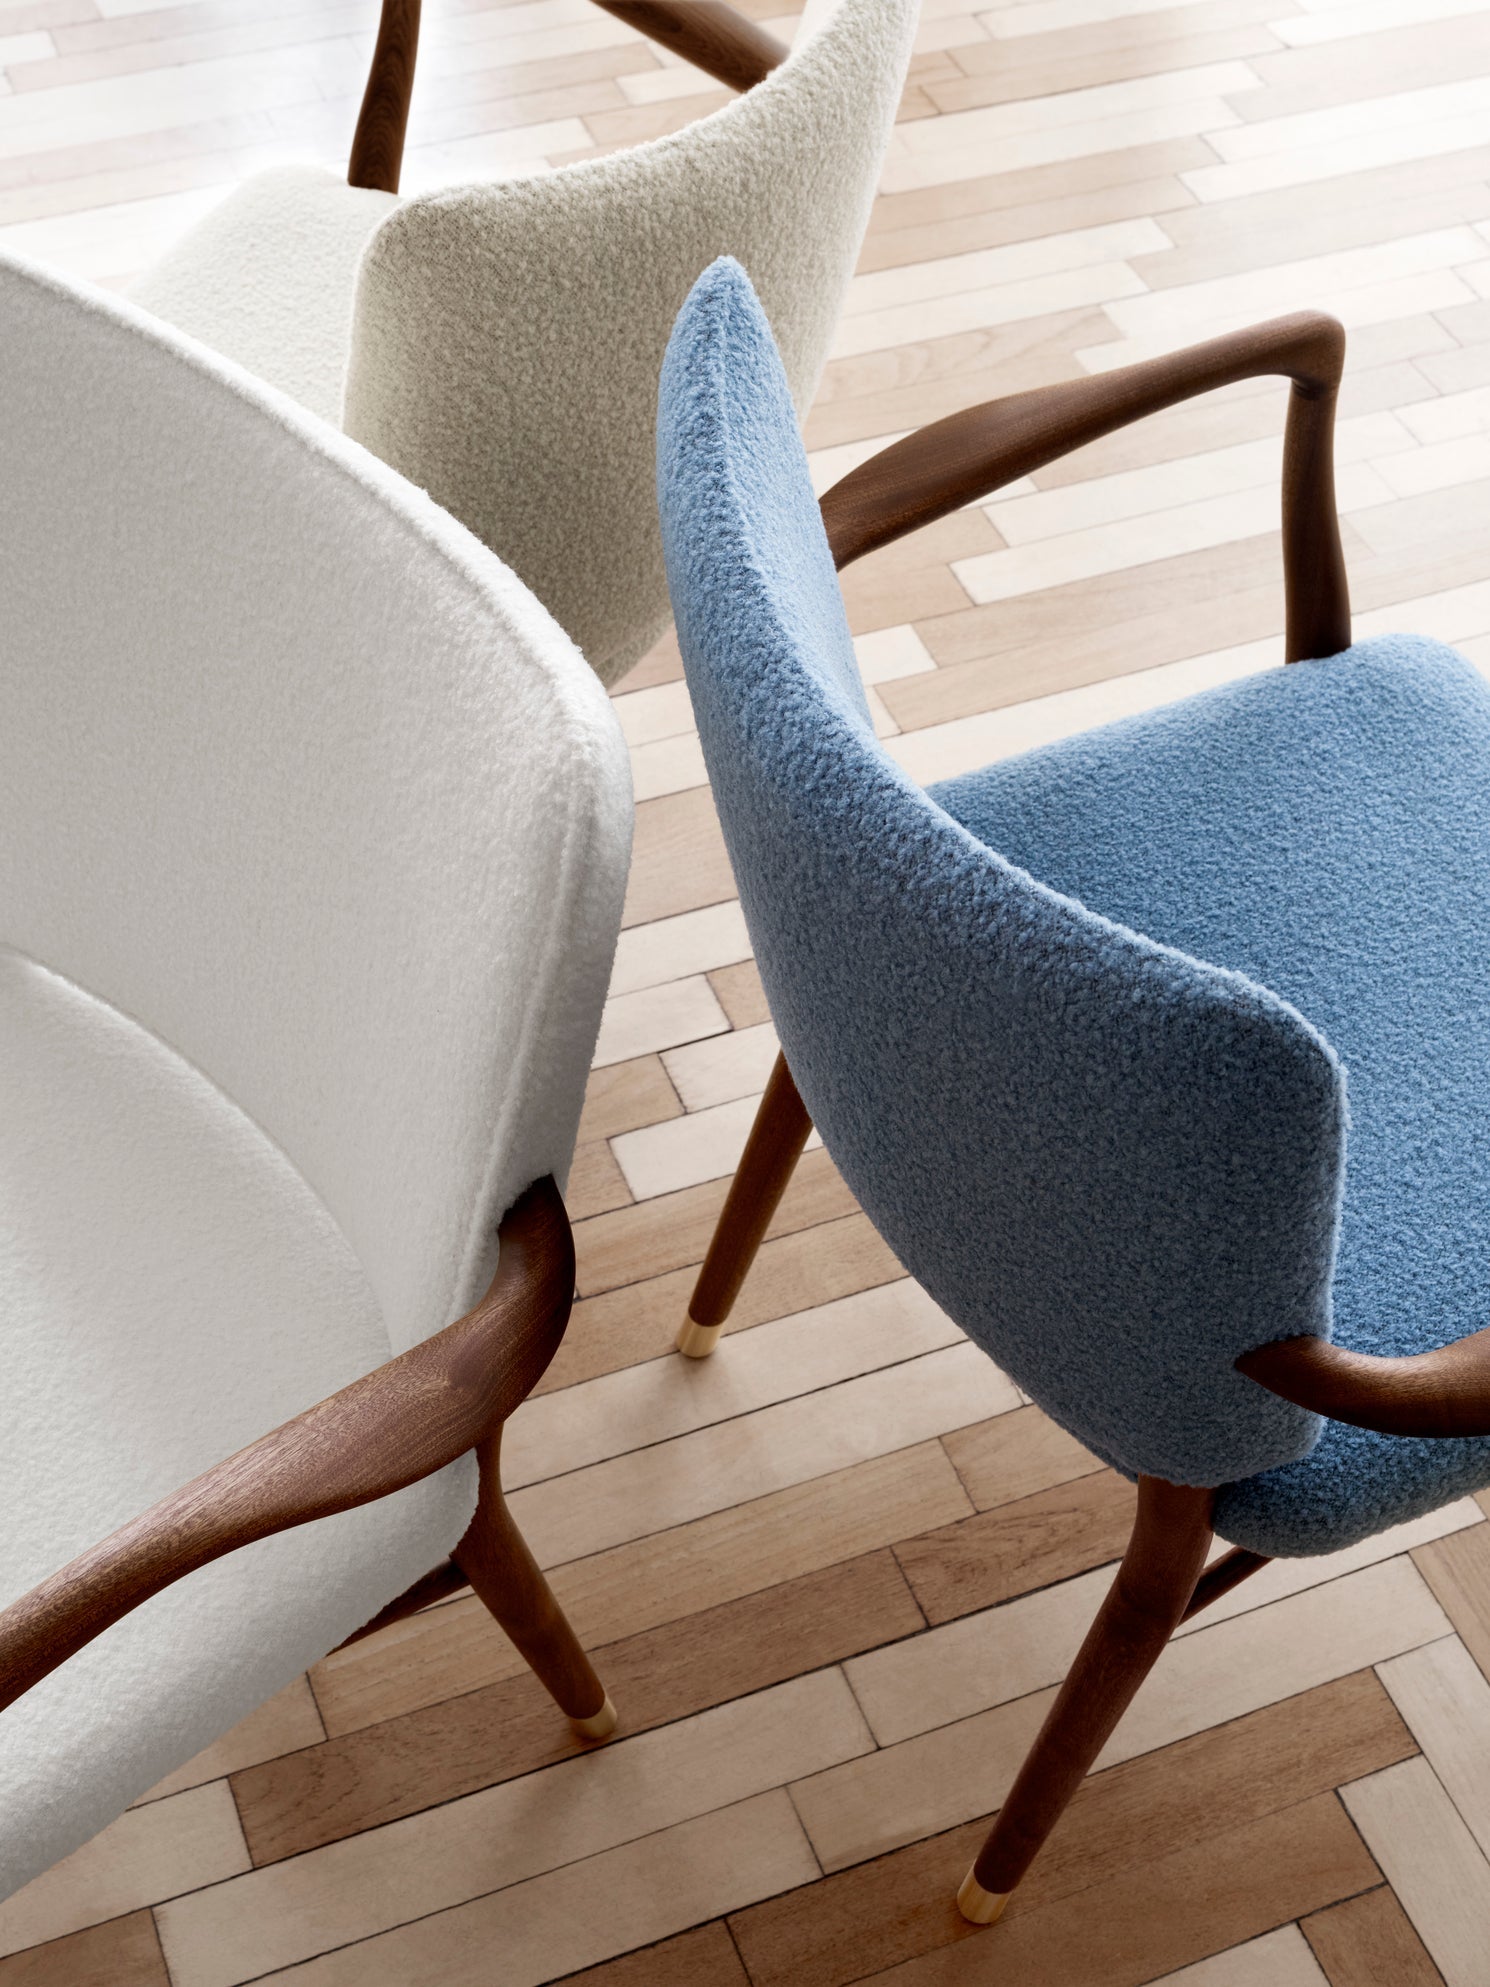 Carl Hansen VLA61 Monar CH fauteuil, huile de chêne / Baru 0410 Textile